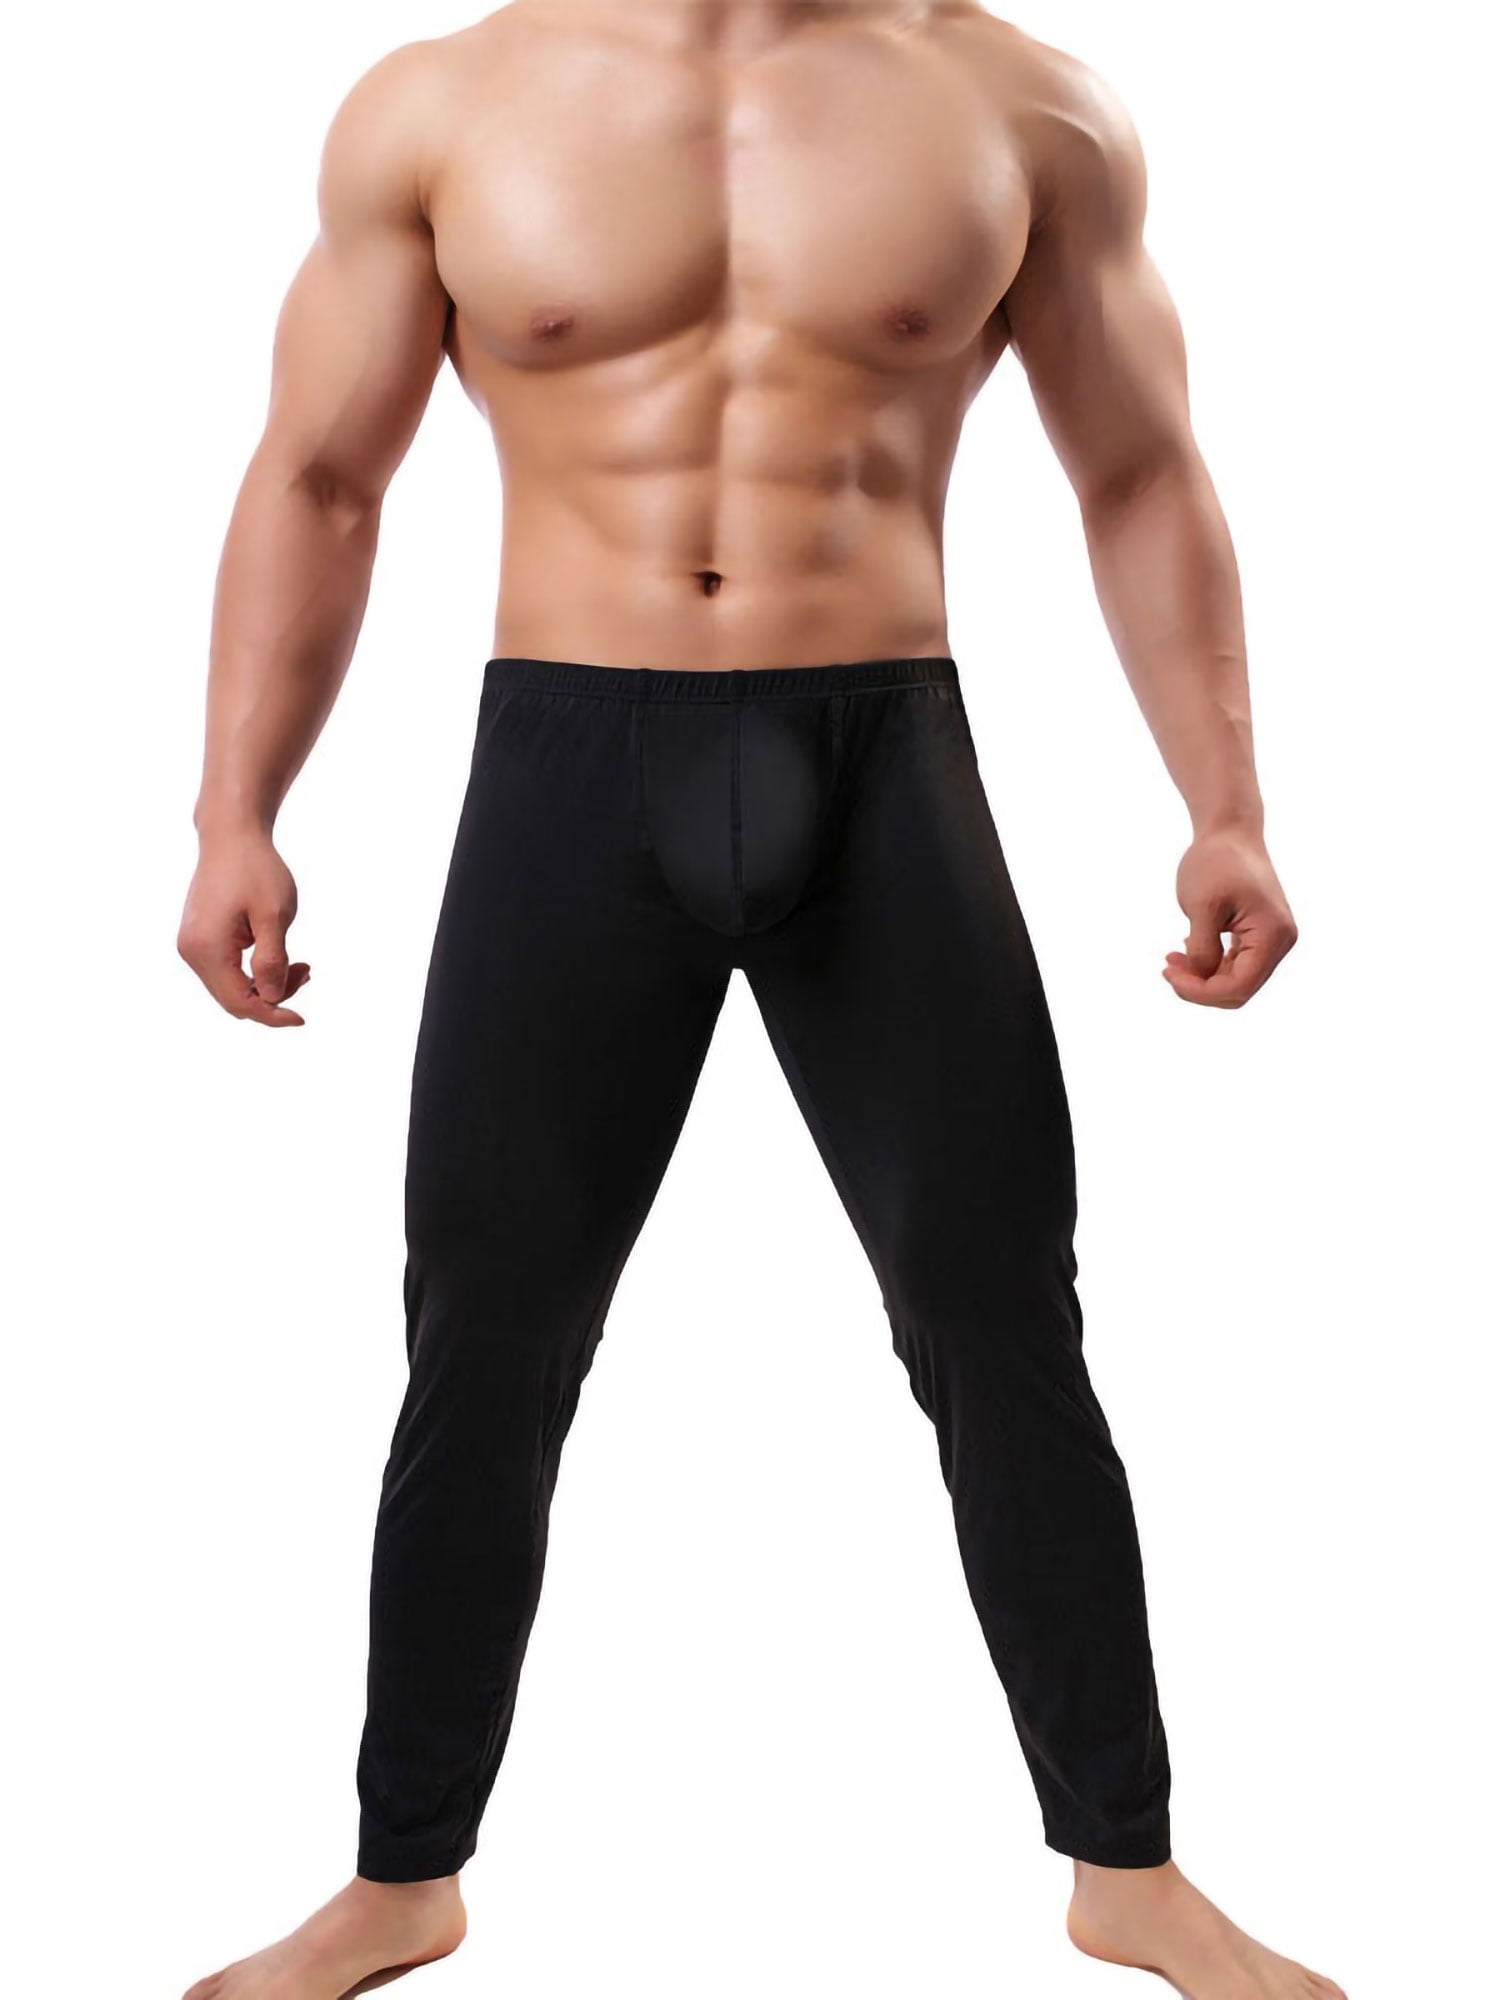 Mens Compression Long Athletic Tight Underwear Pants Legging Sport Gym Training 